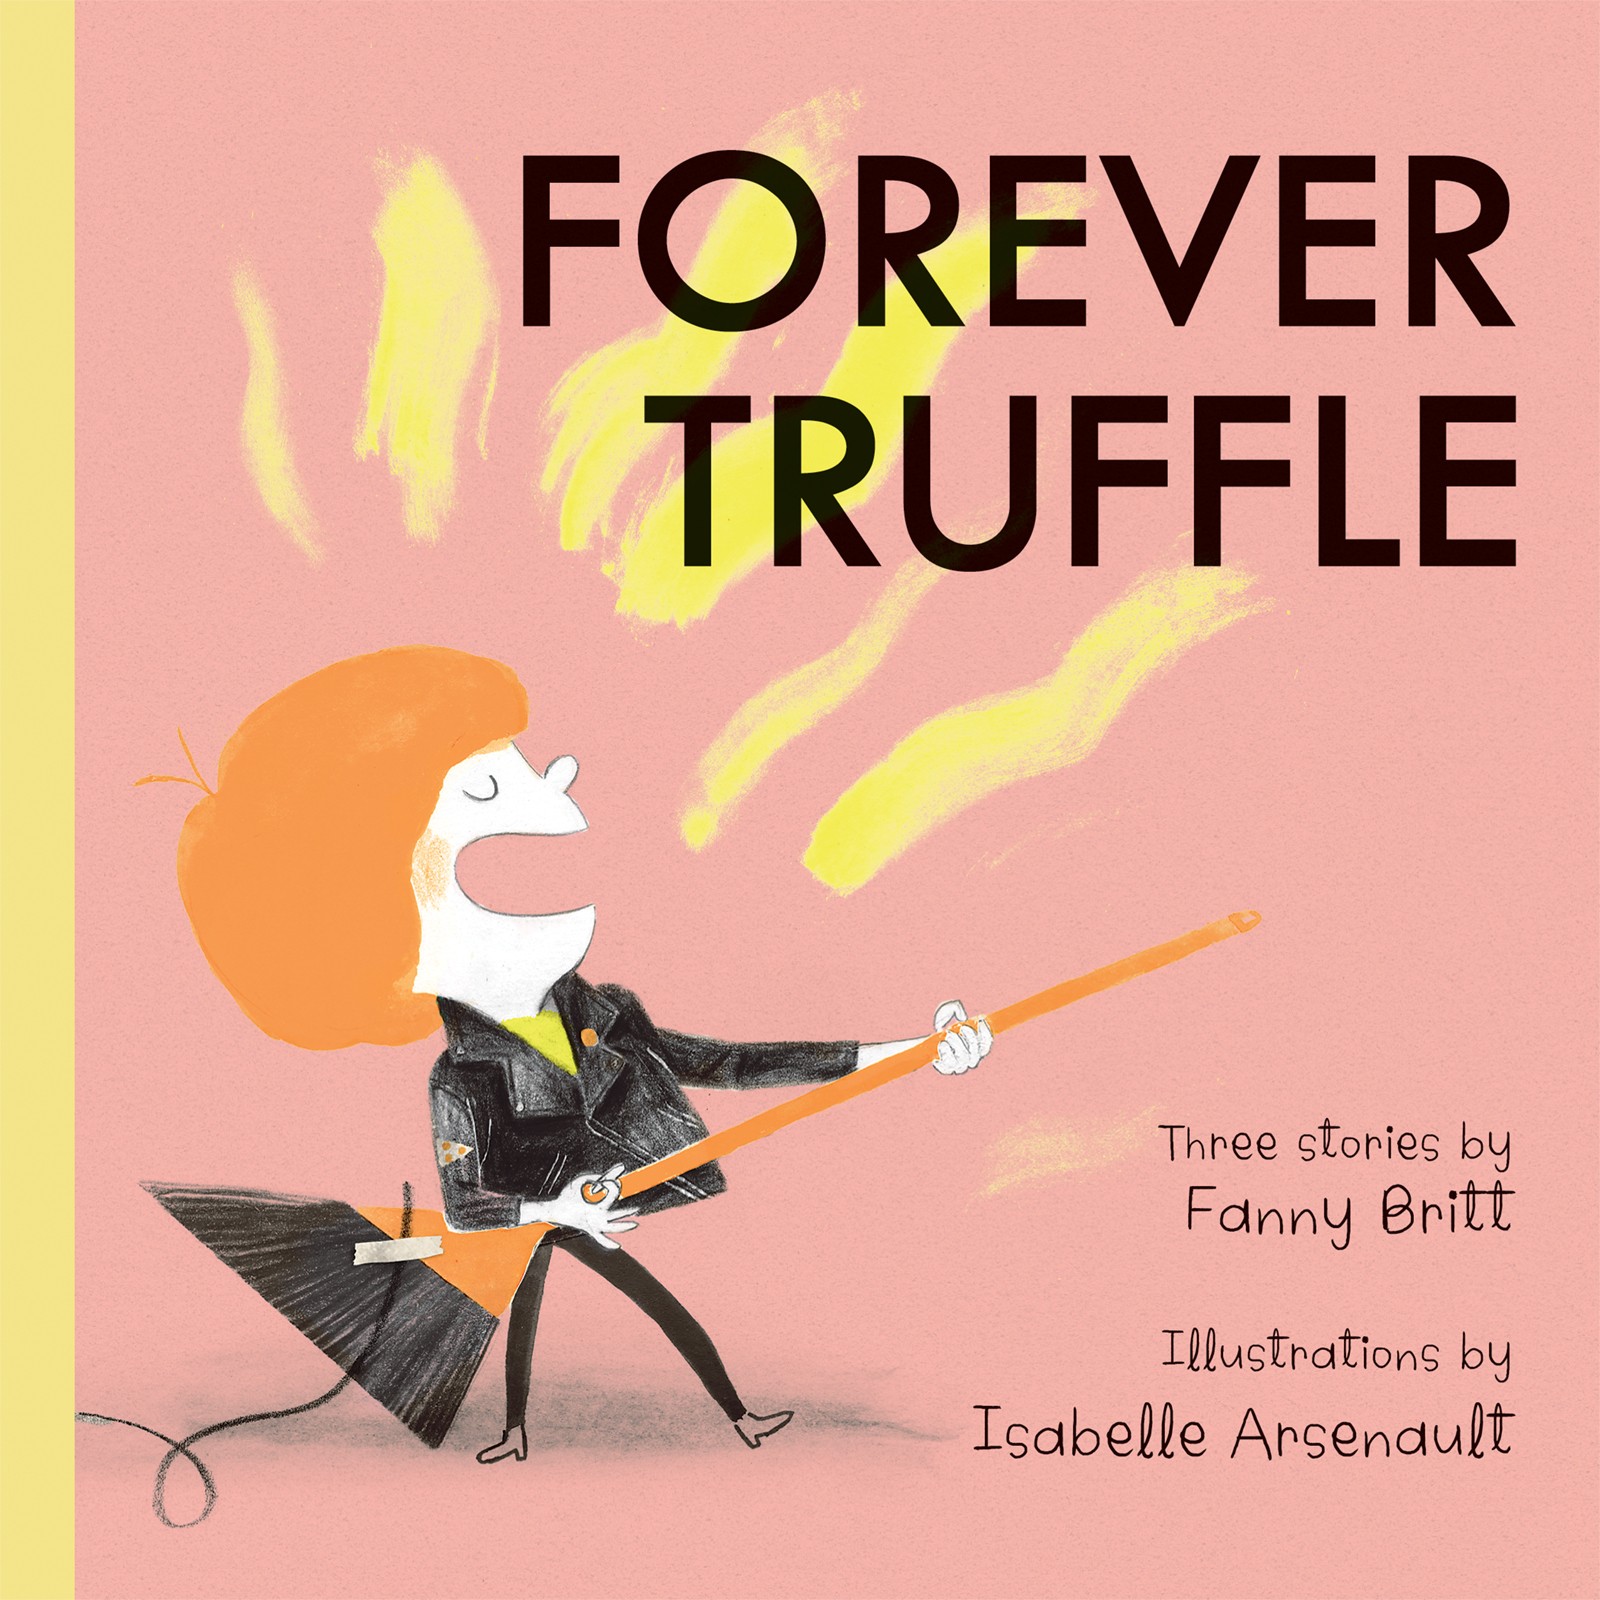 Fanny Britt and Isabelle Arsenault’s Forever Truffle